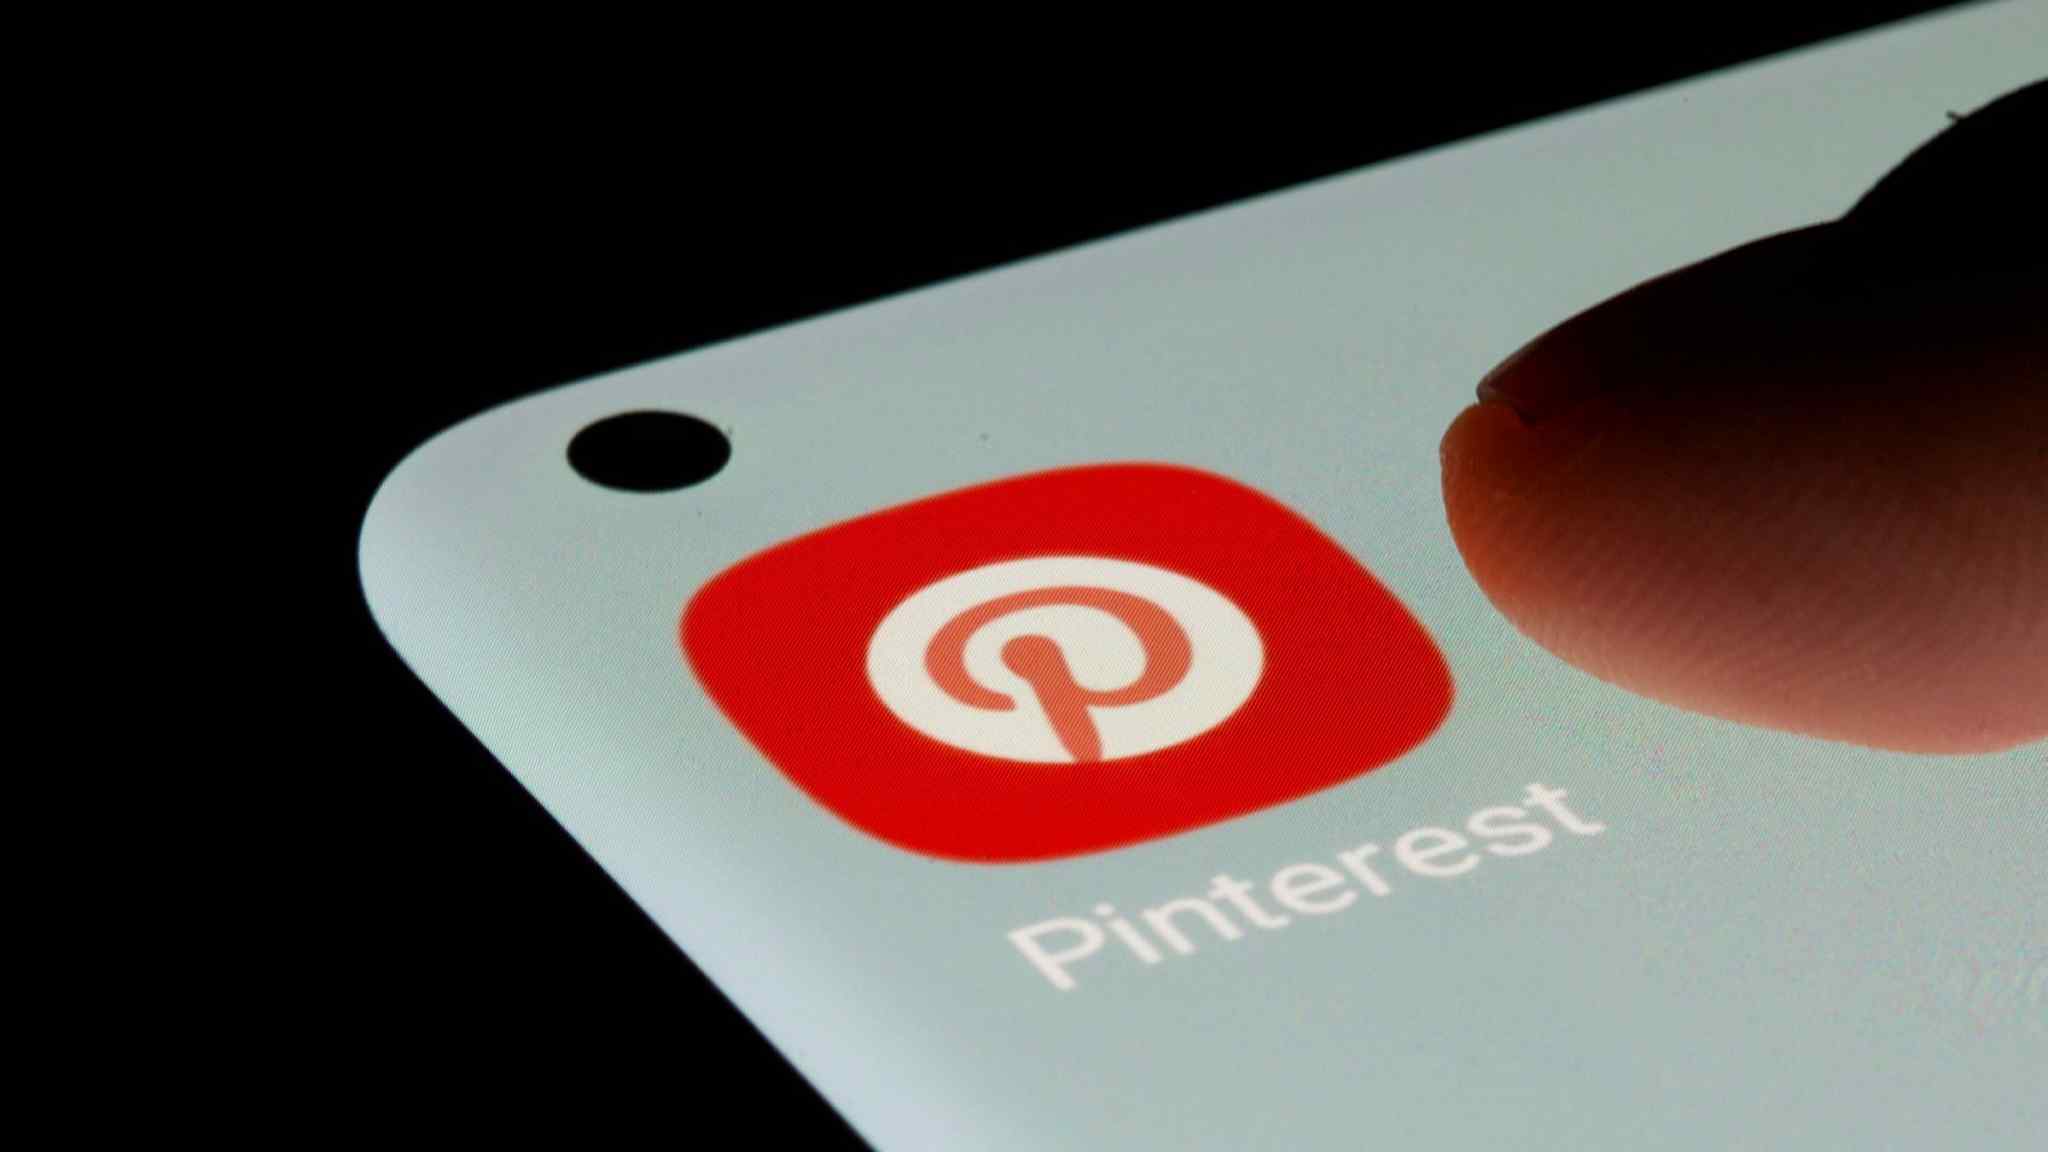 Pinterest: pinning ecommerce hopes on new CEO 